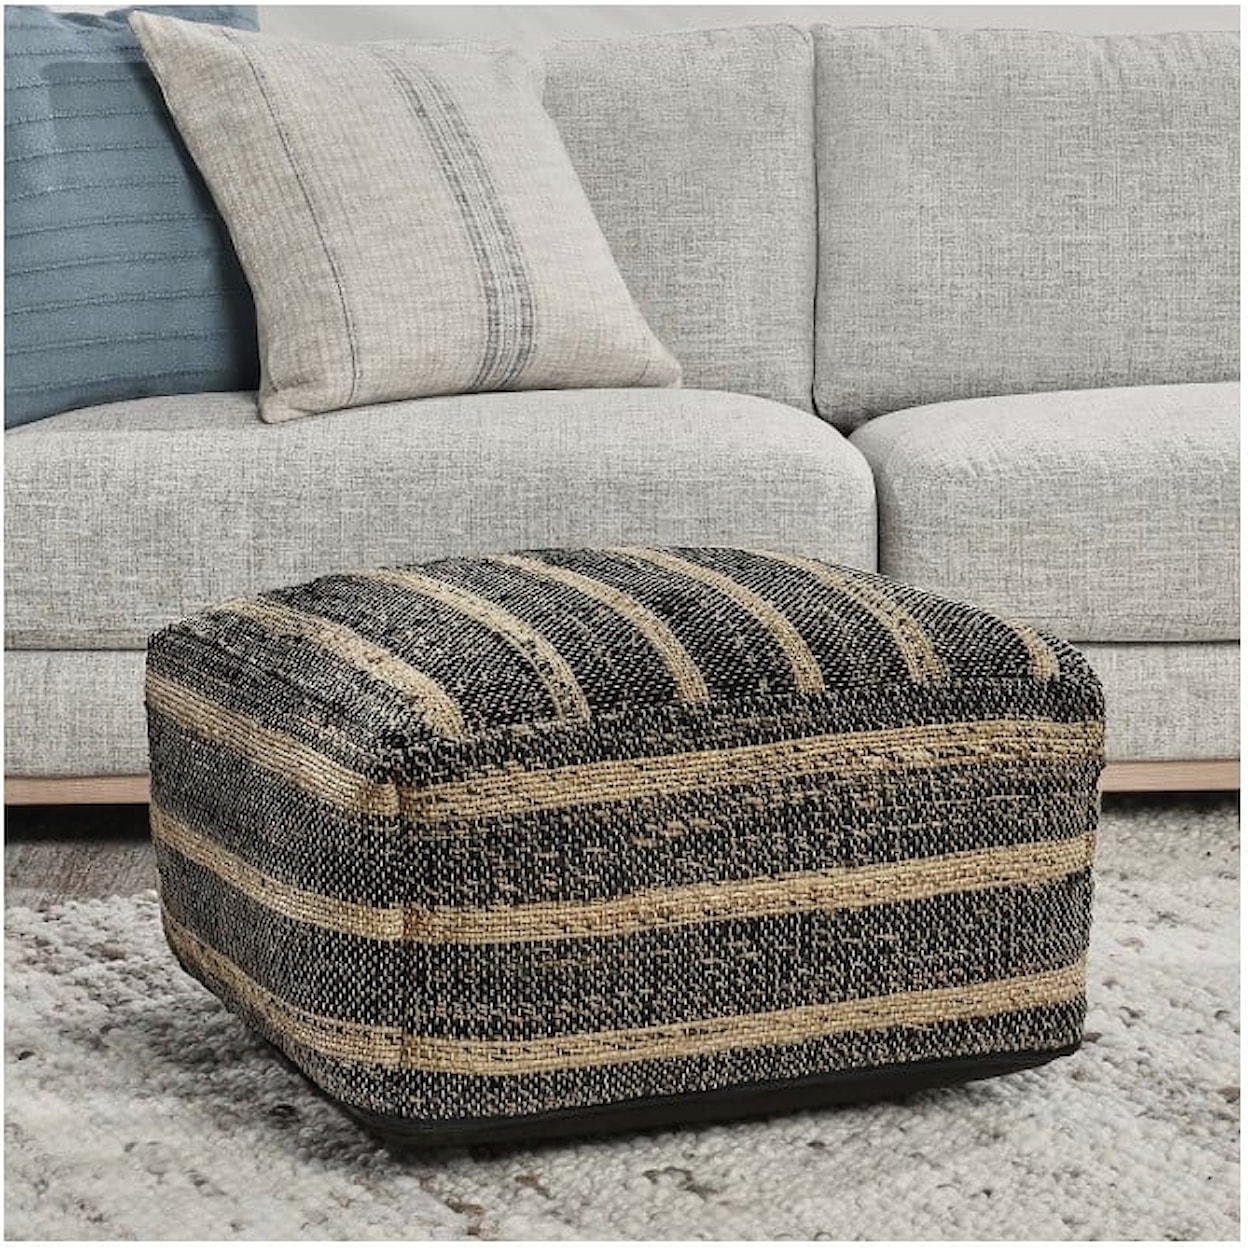 Classic Home Floor Cushions ZANE BLACK/NATURAL POUF